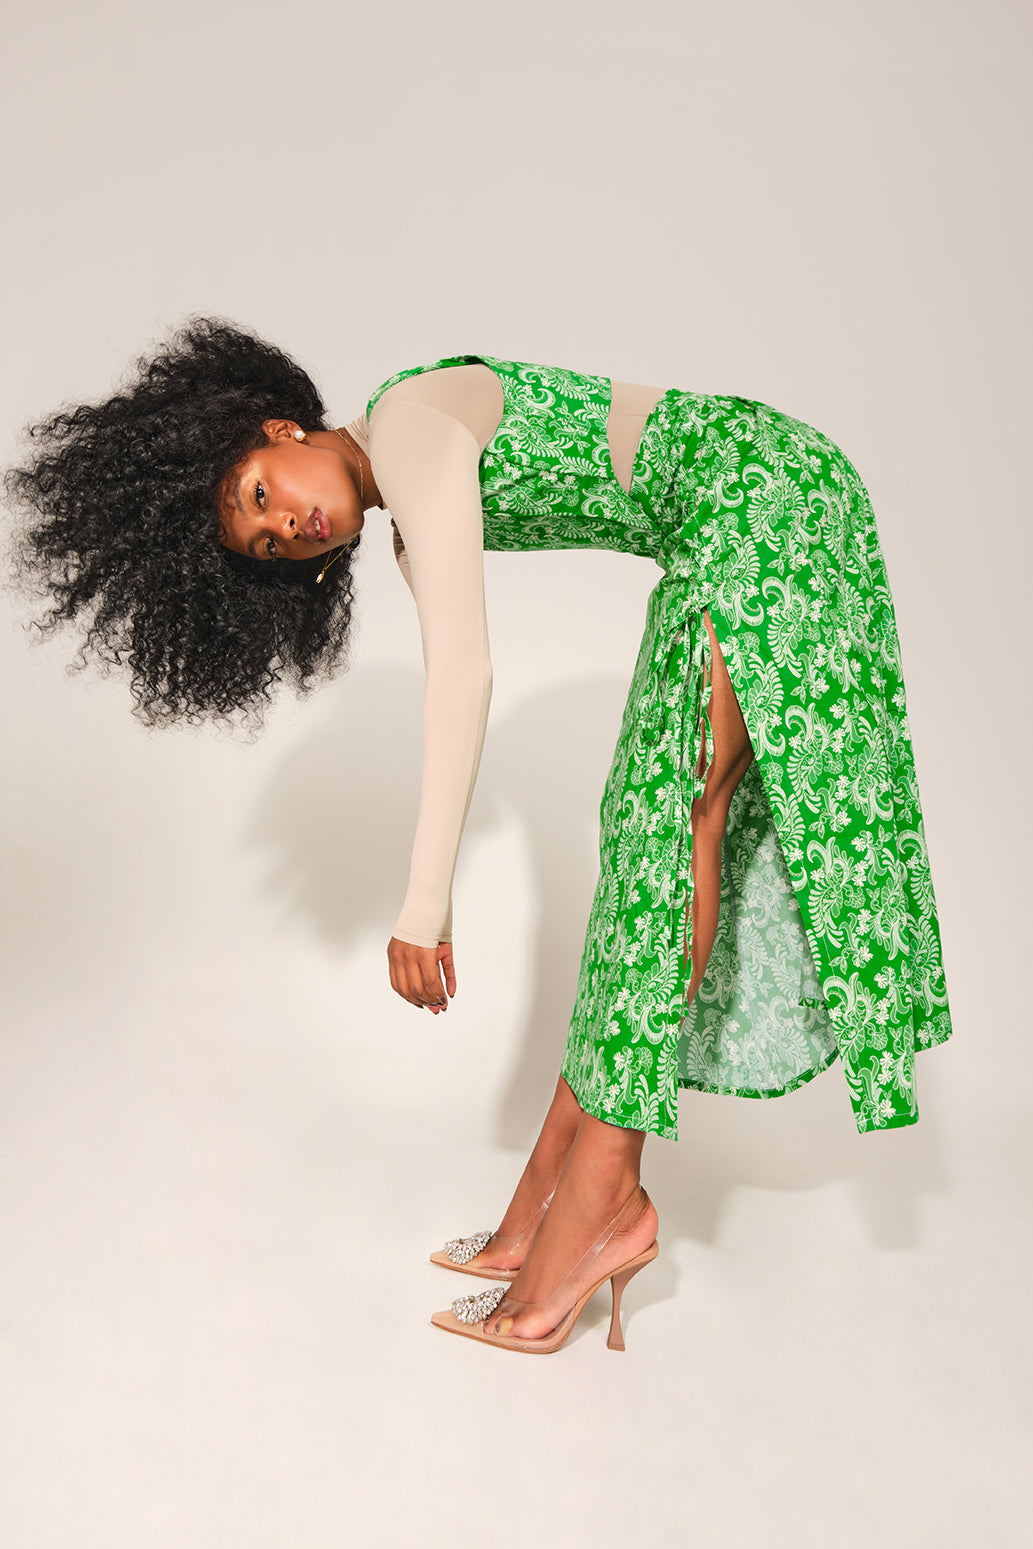 Nubian Skirt - Green Lace